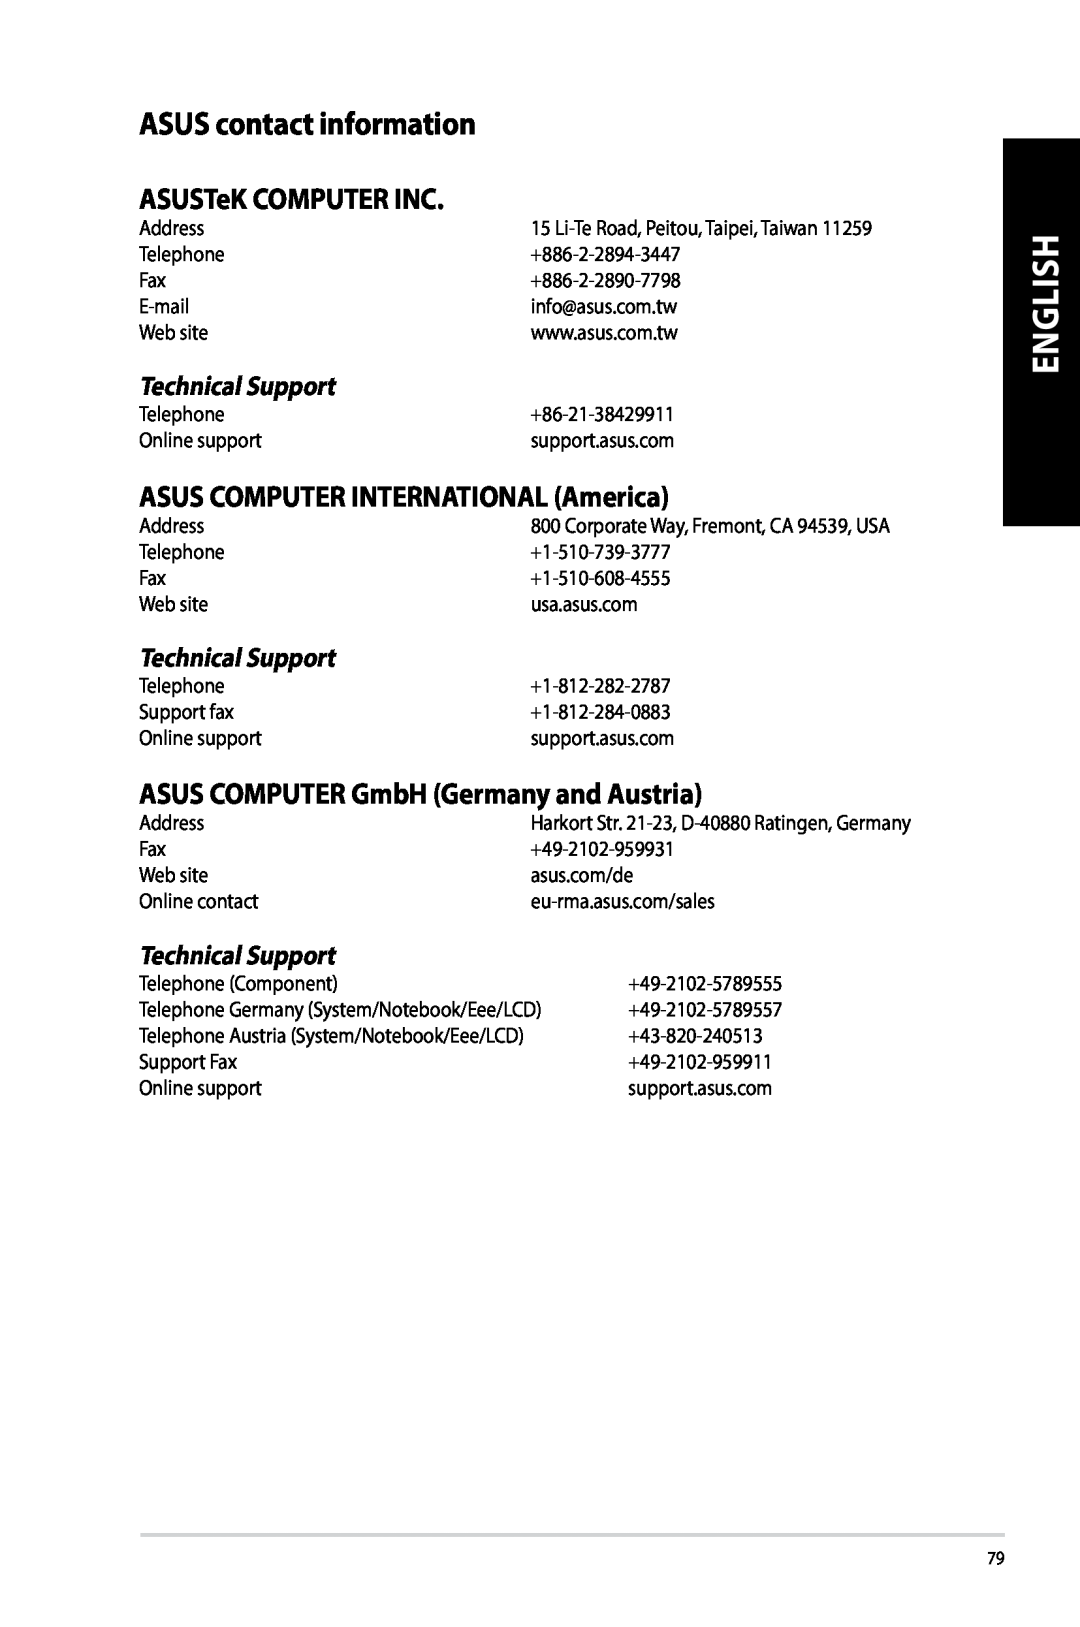 Asus G10AJ ASUS contact information, English, ASUSTeK COMPUTER INC, ASUS COMPUTER INTERNATIONAL America, Technical Support 